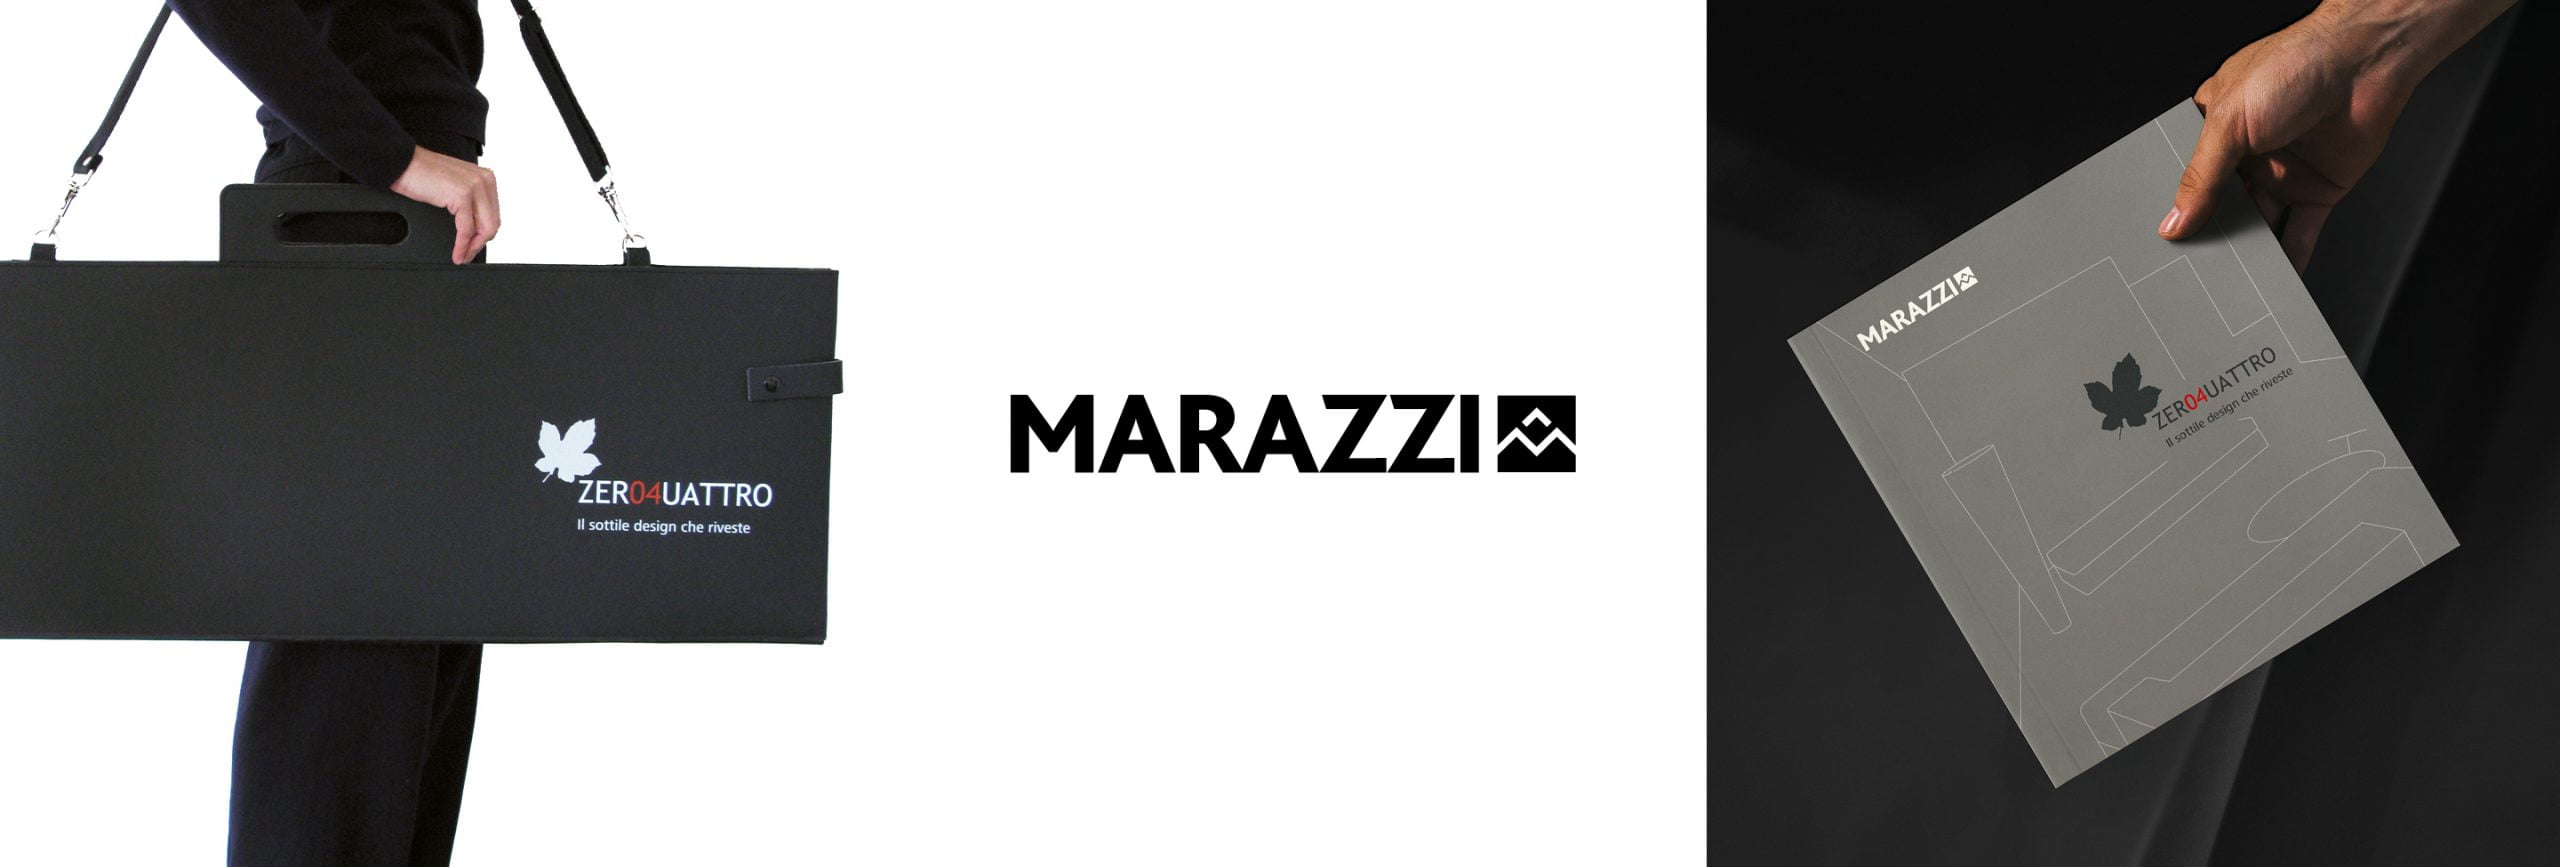 Slide Portfolio Marazzi Modena 1 scaled